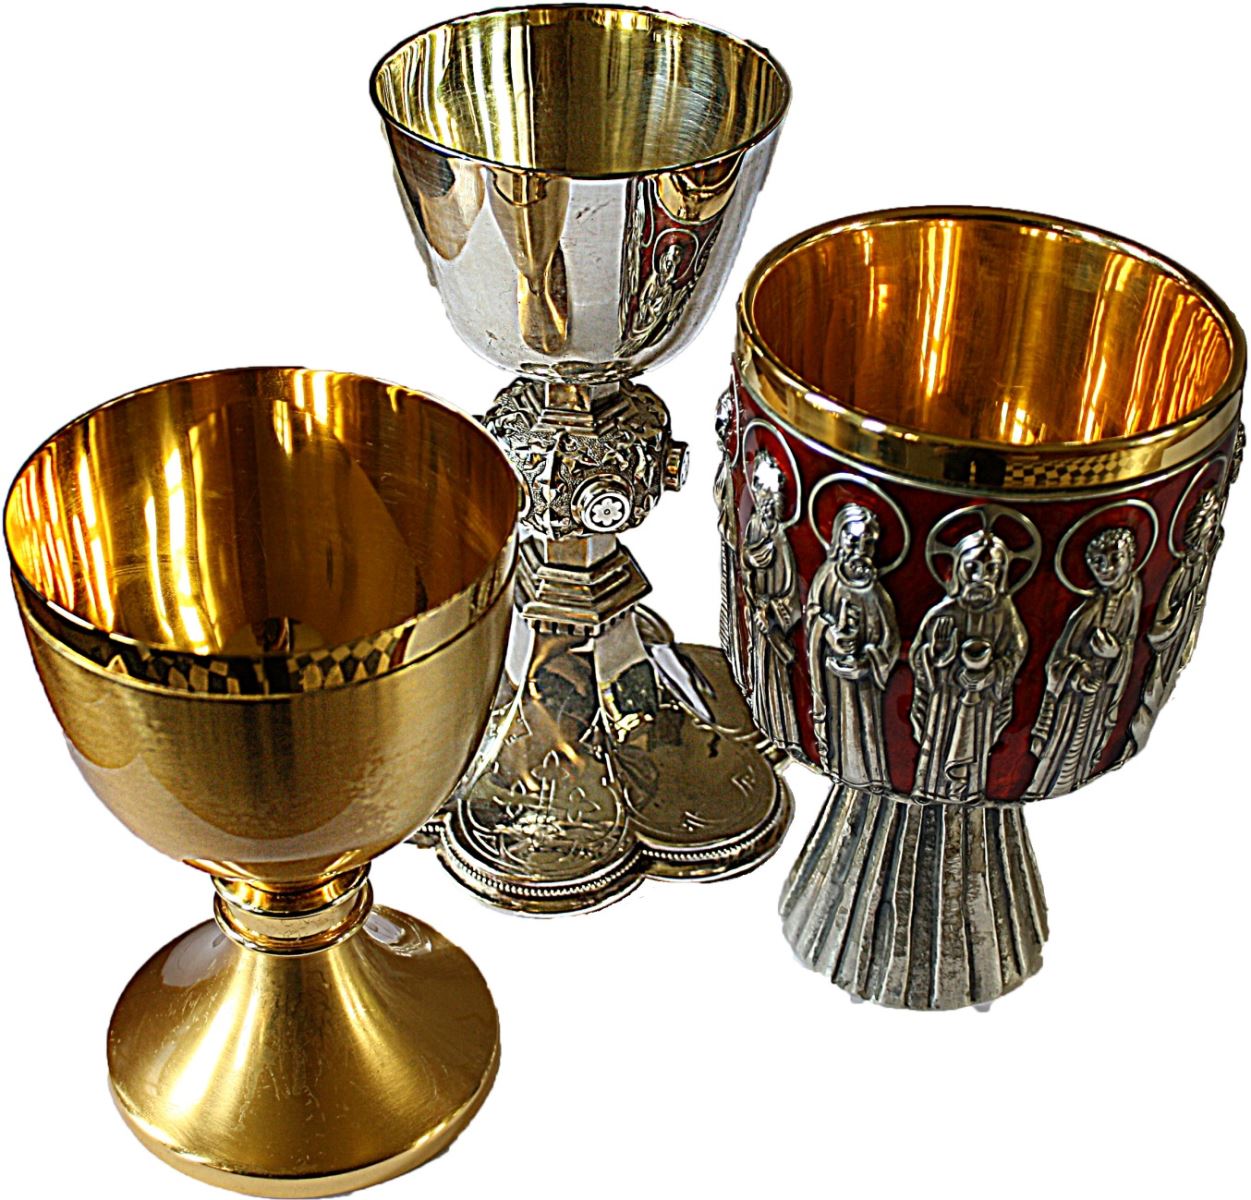 Three chalices